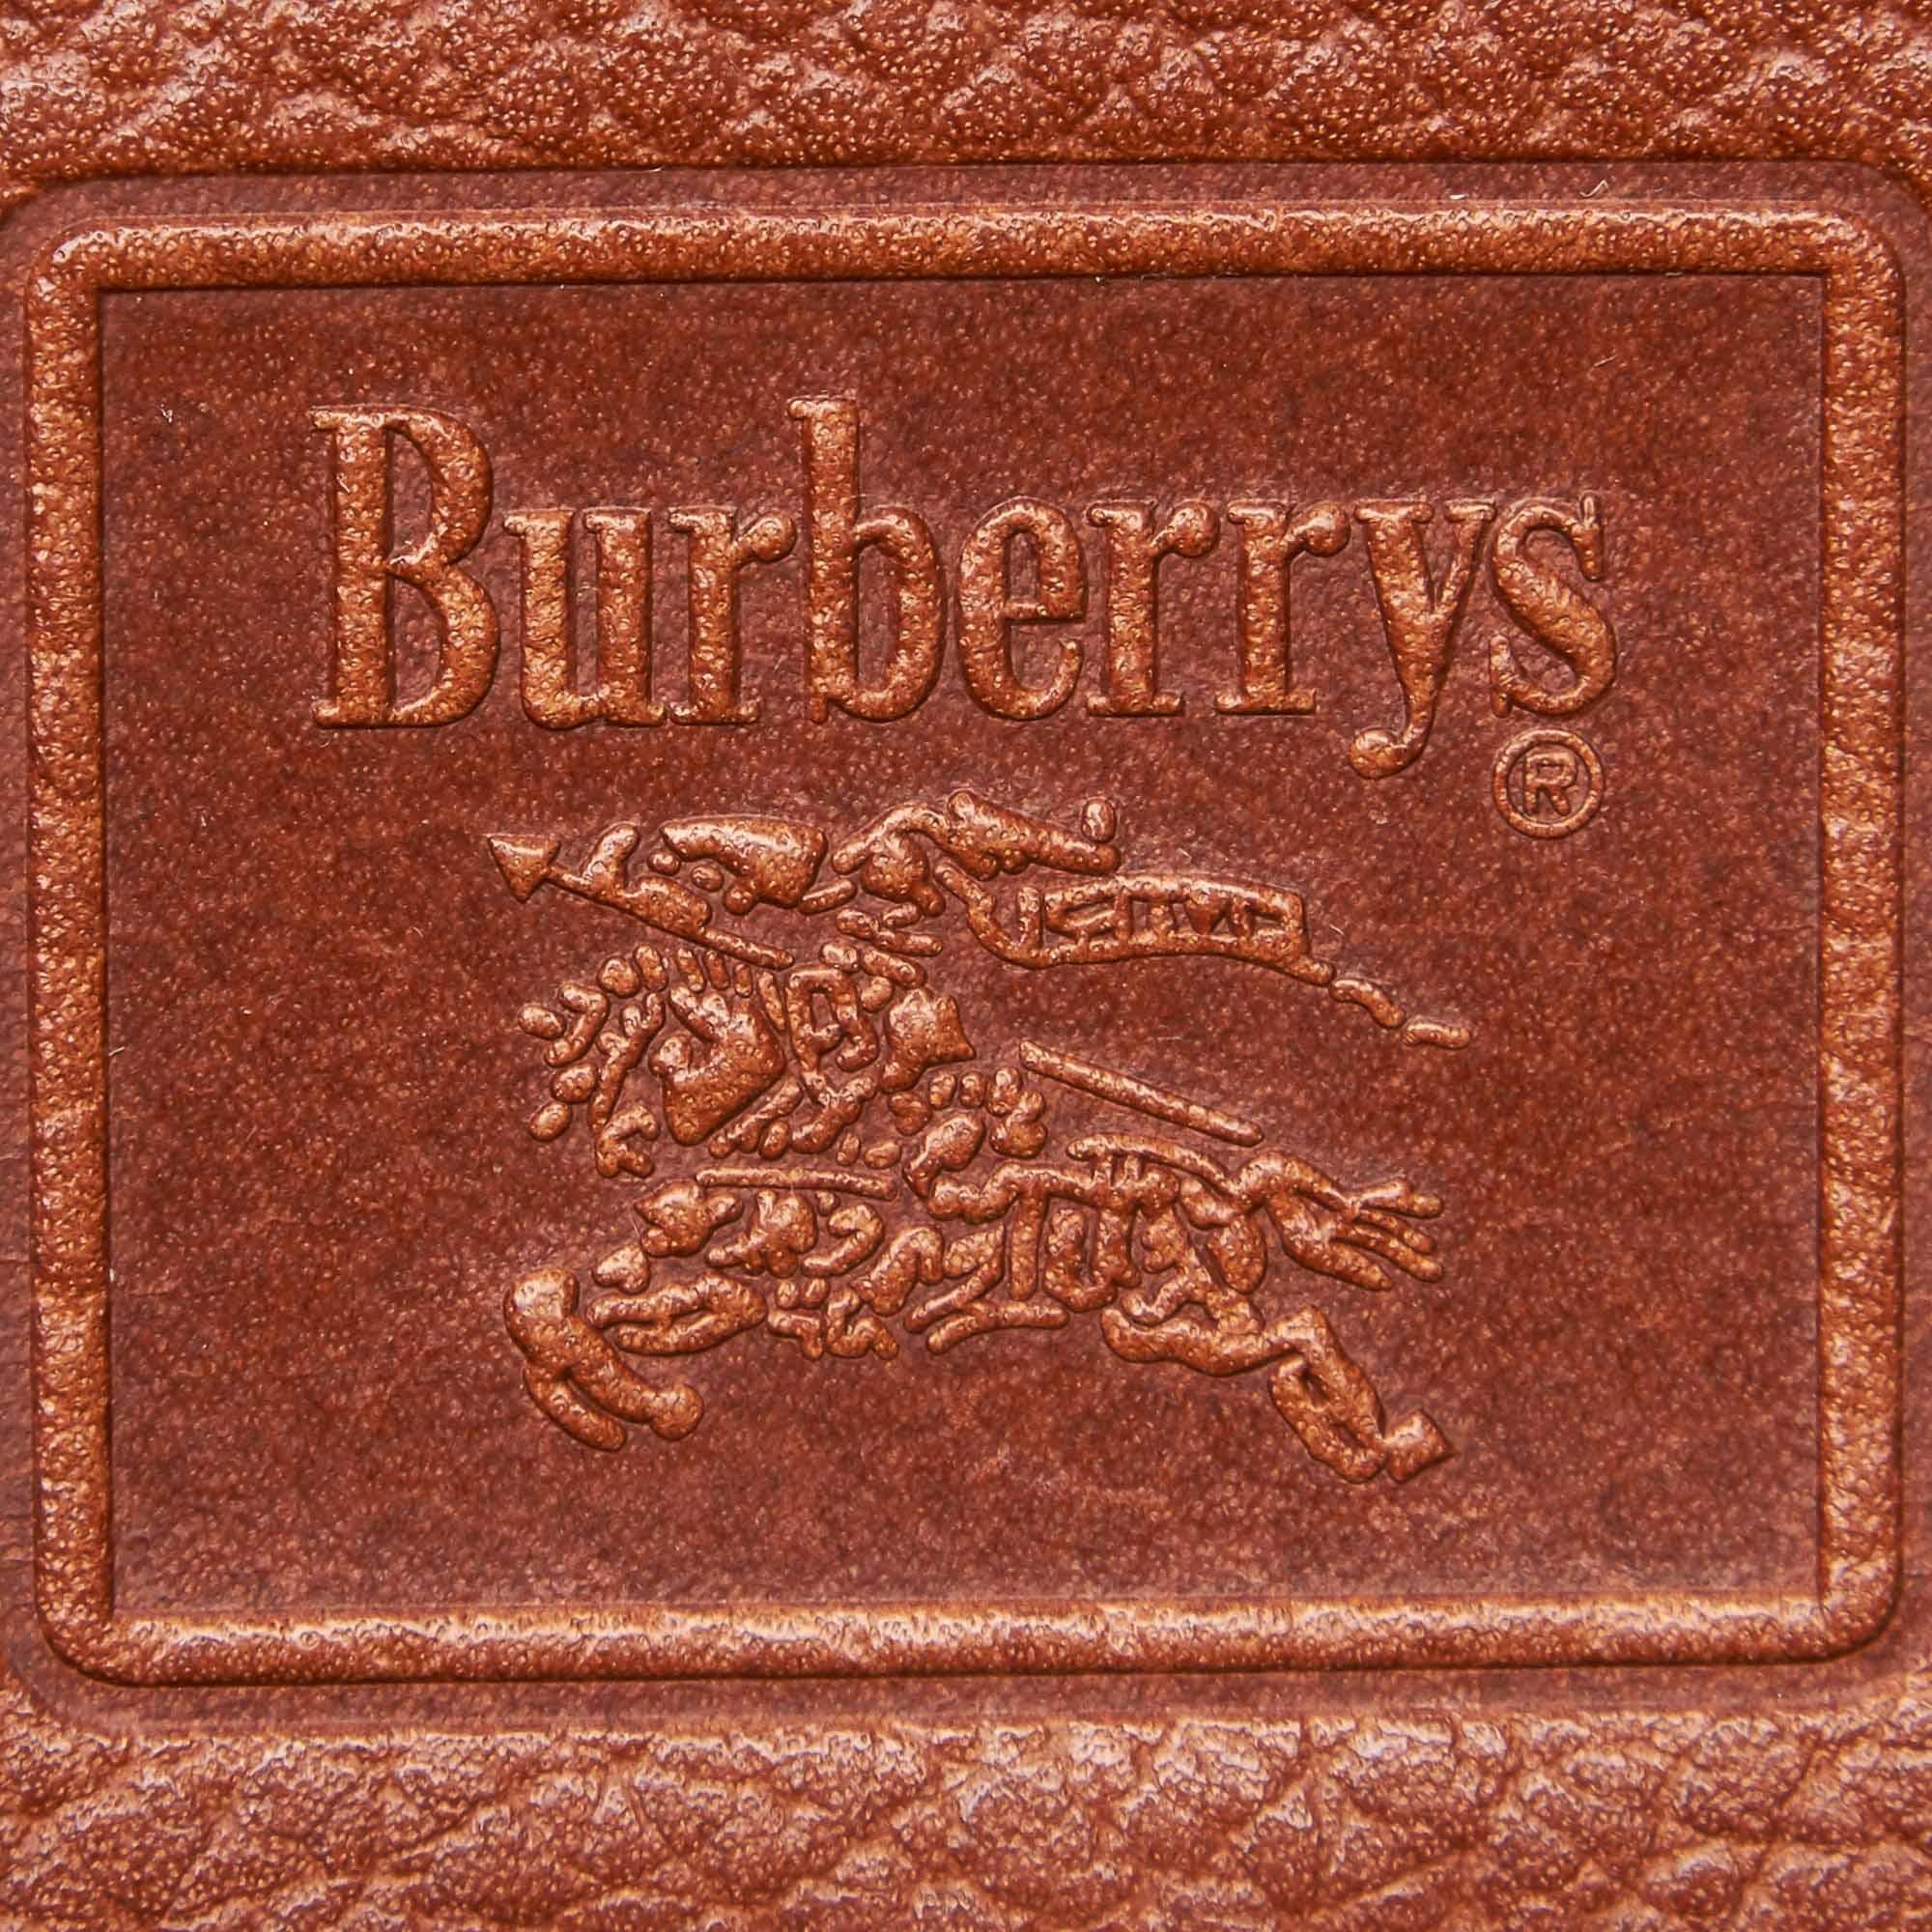 Vintage Authentic Burberry Brown Leather Handbag United Kingdom MEDIUM  For Sale 2